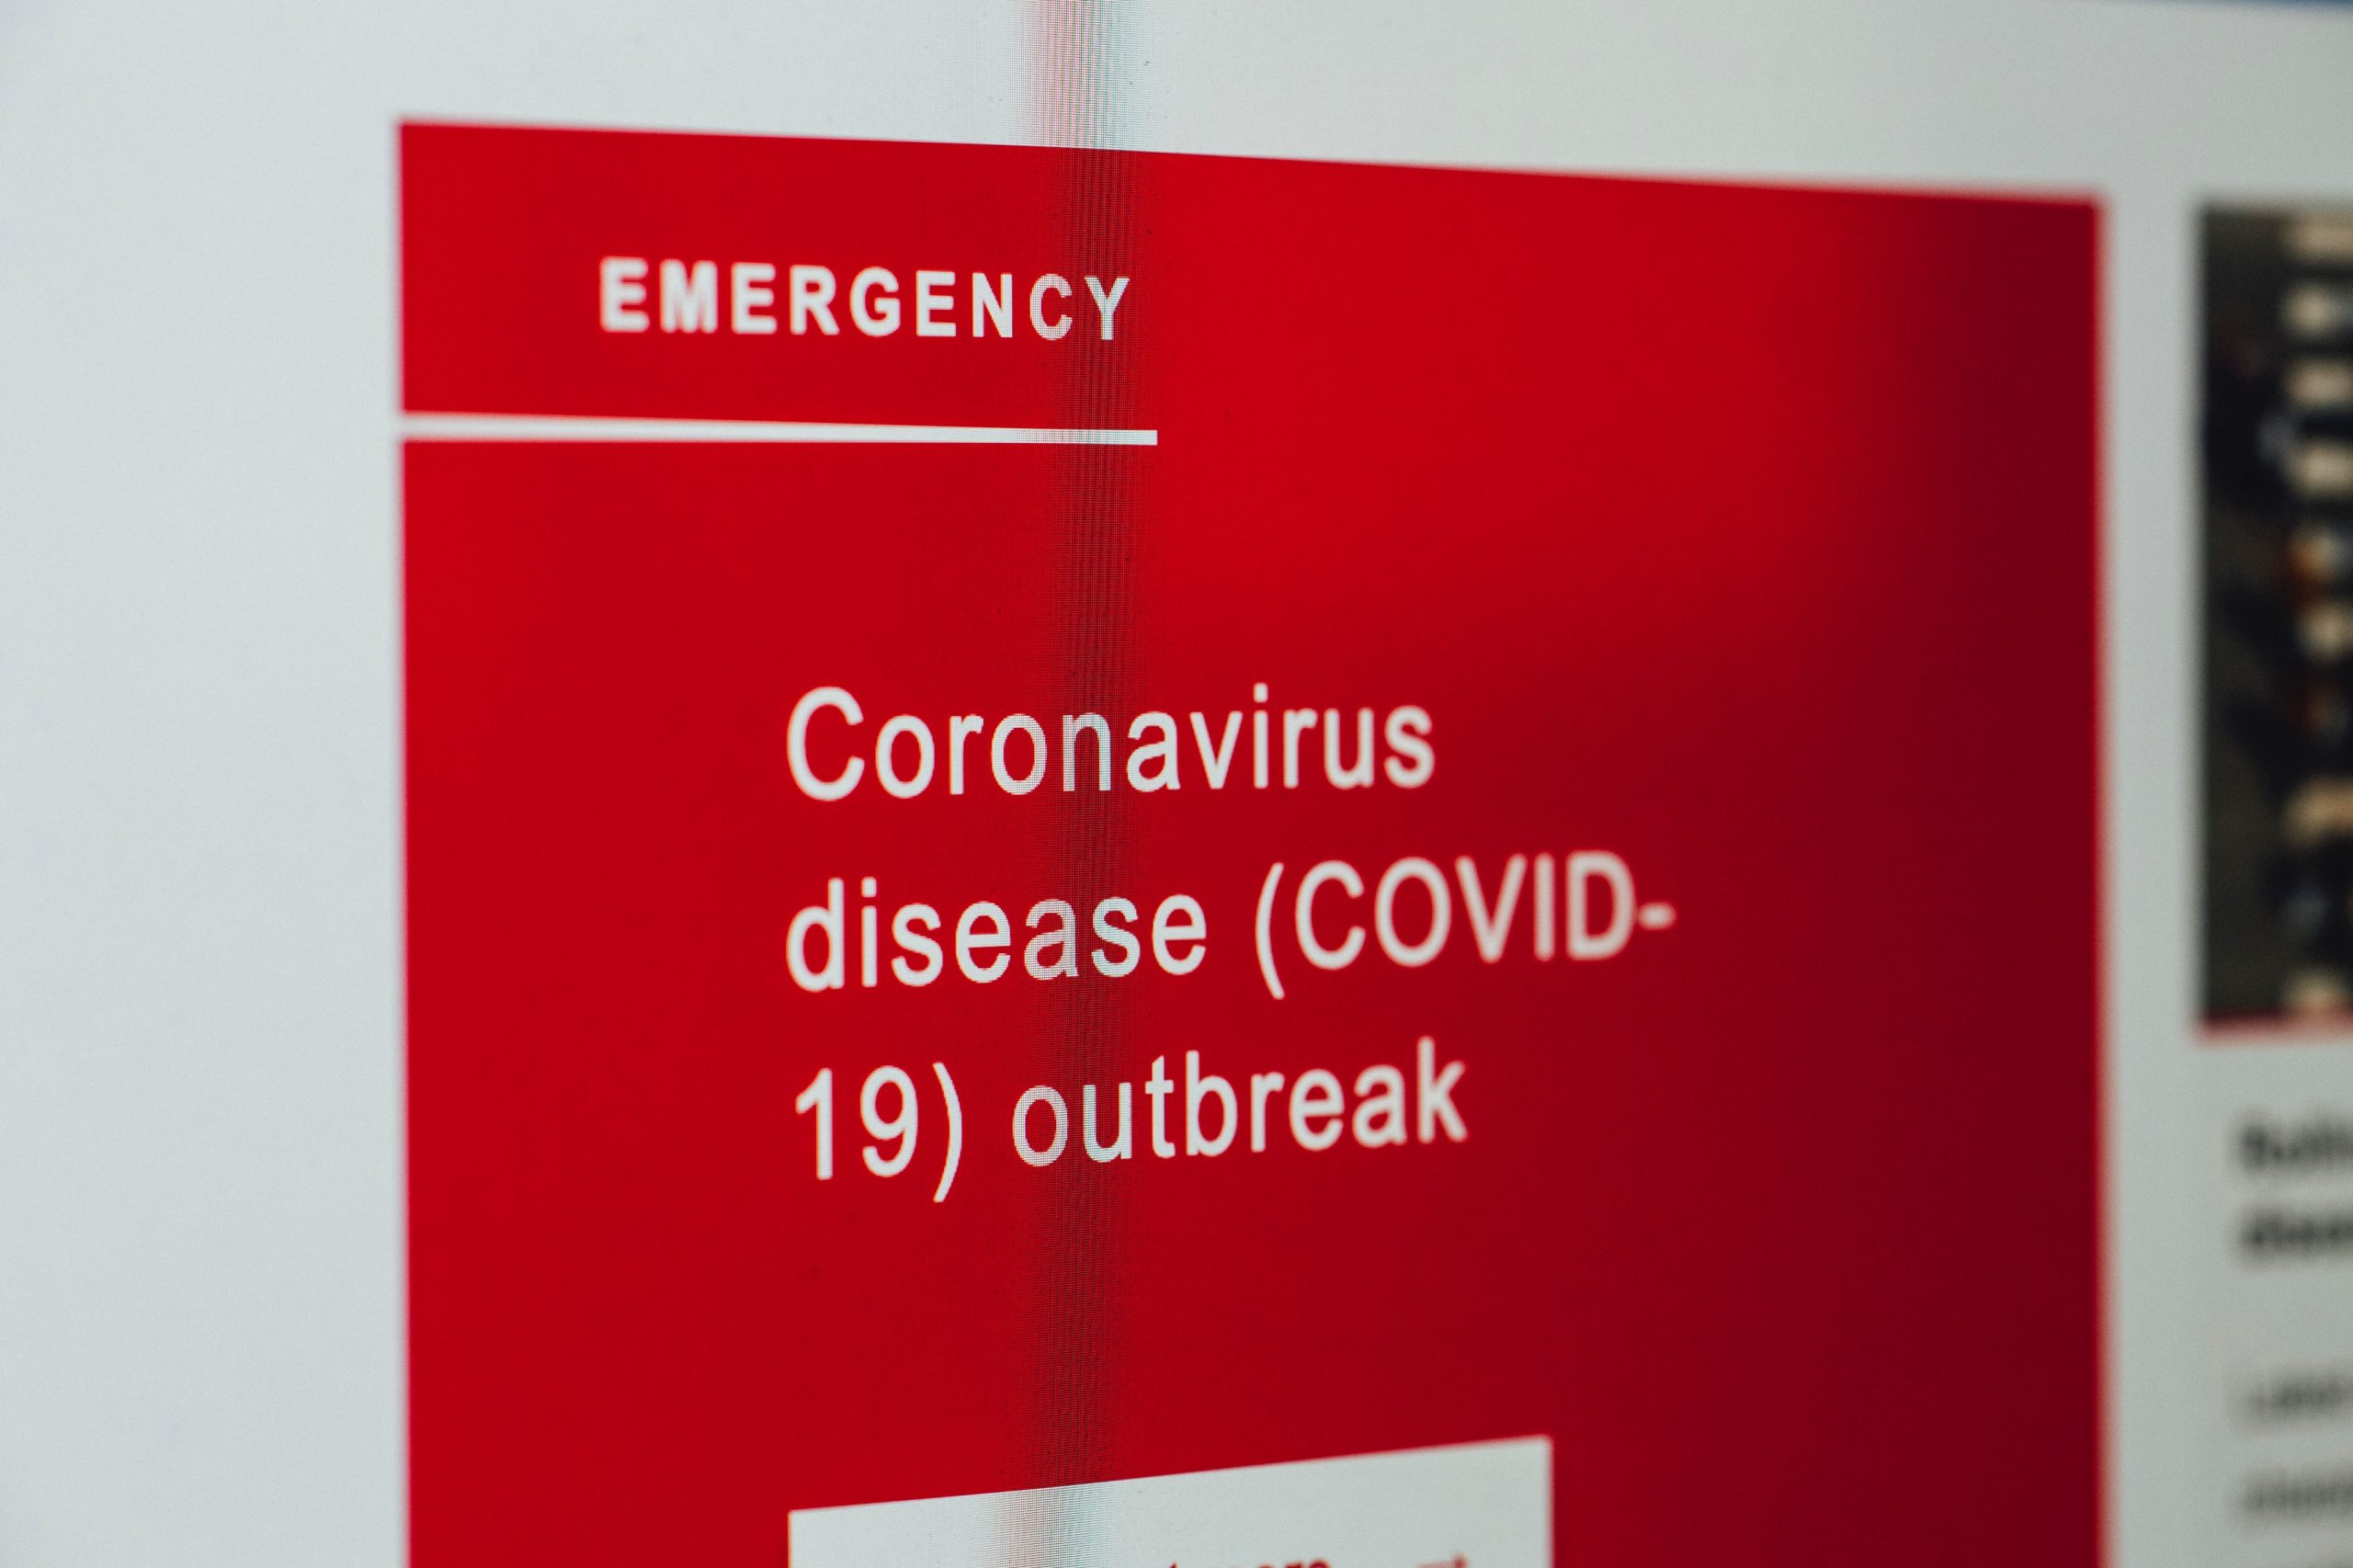 Corona virus impact on businesses